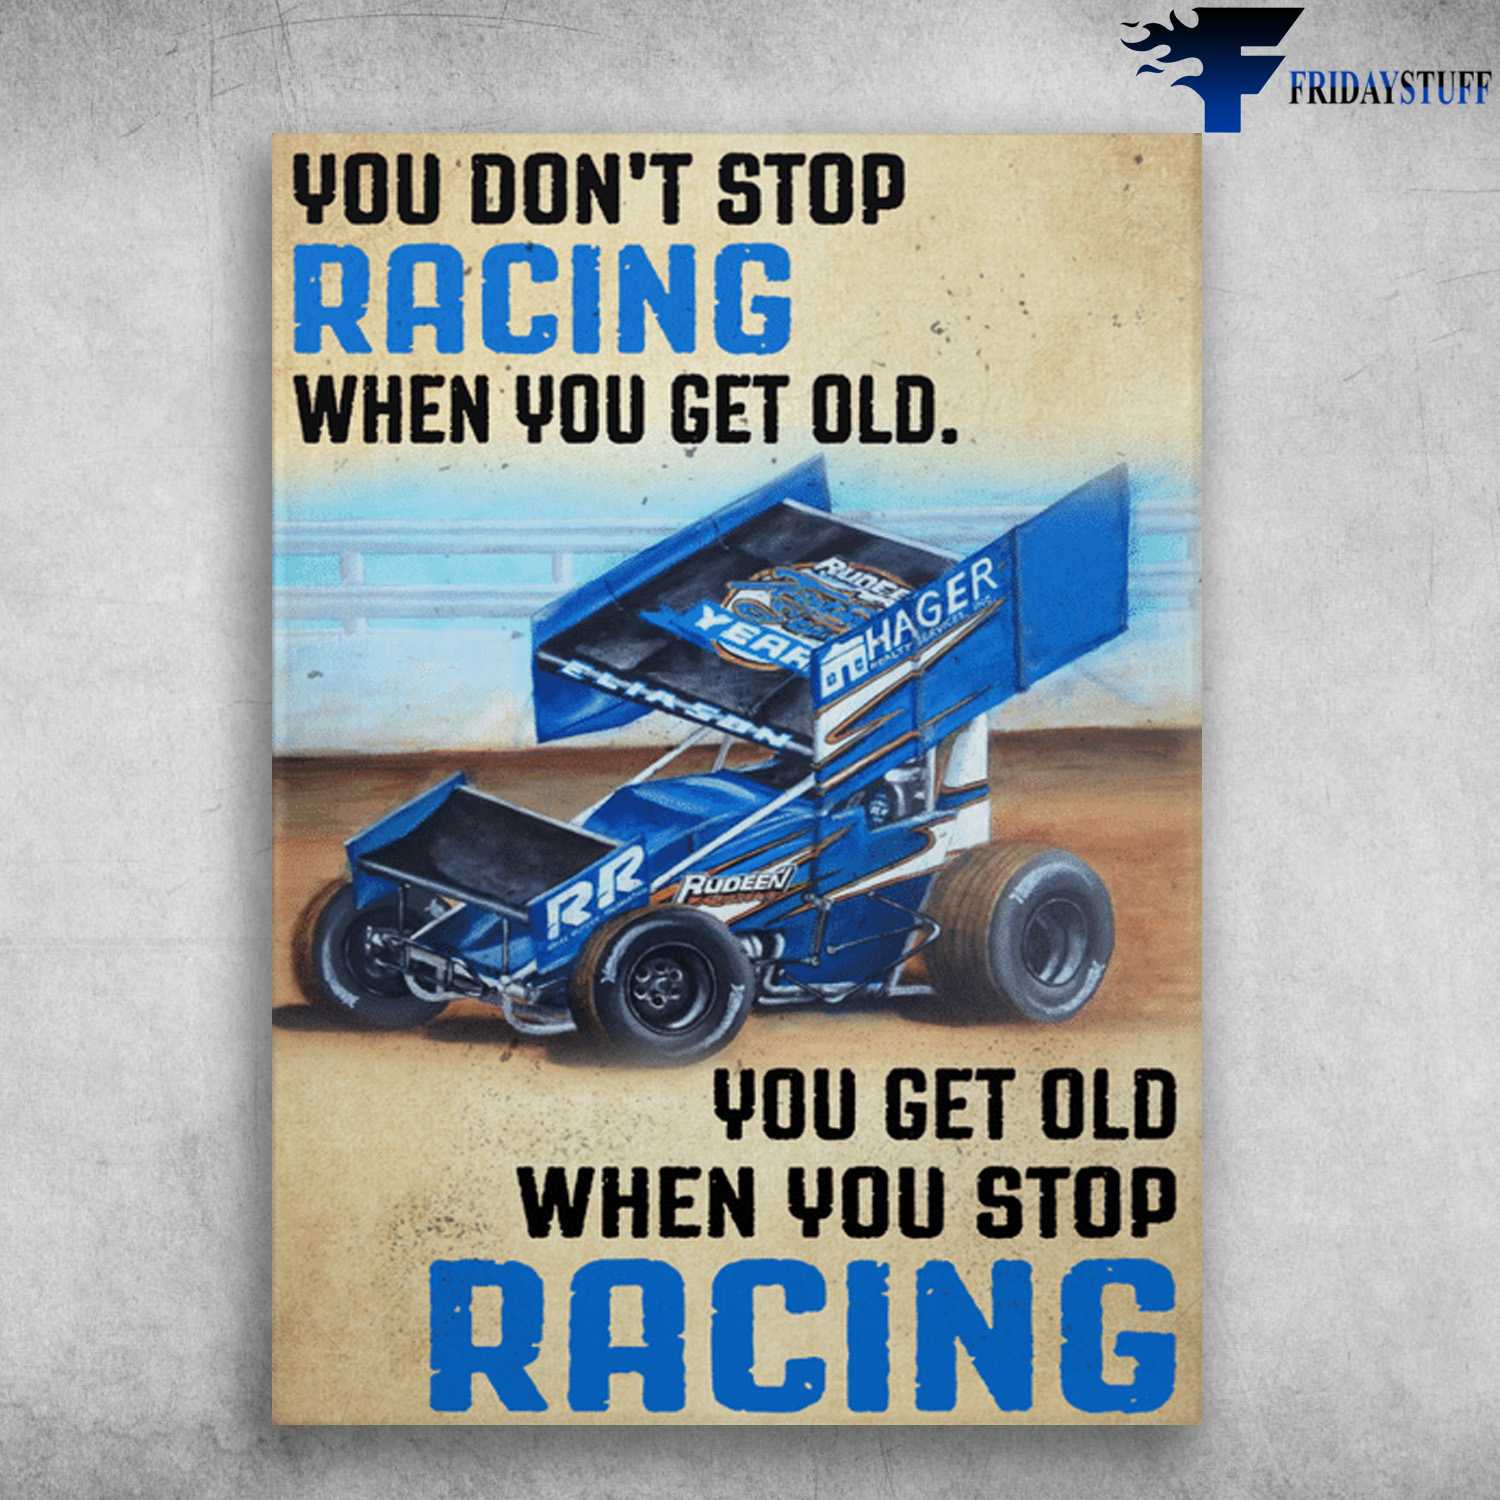 Dirtcar Racing - You Don't Stop Racing When You Get Old, You Get Old When You Stop Racing